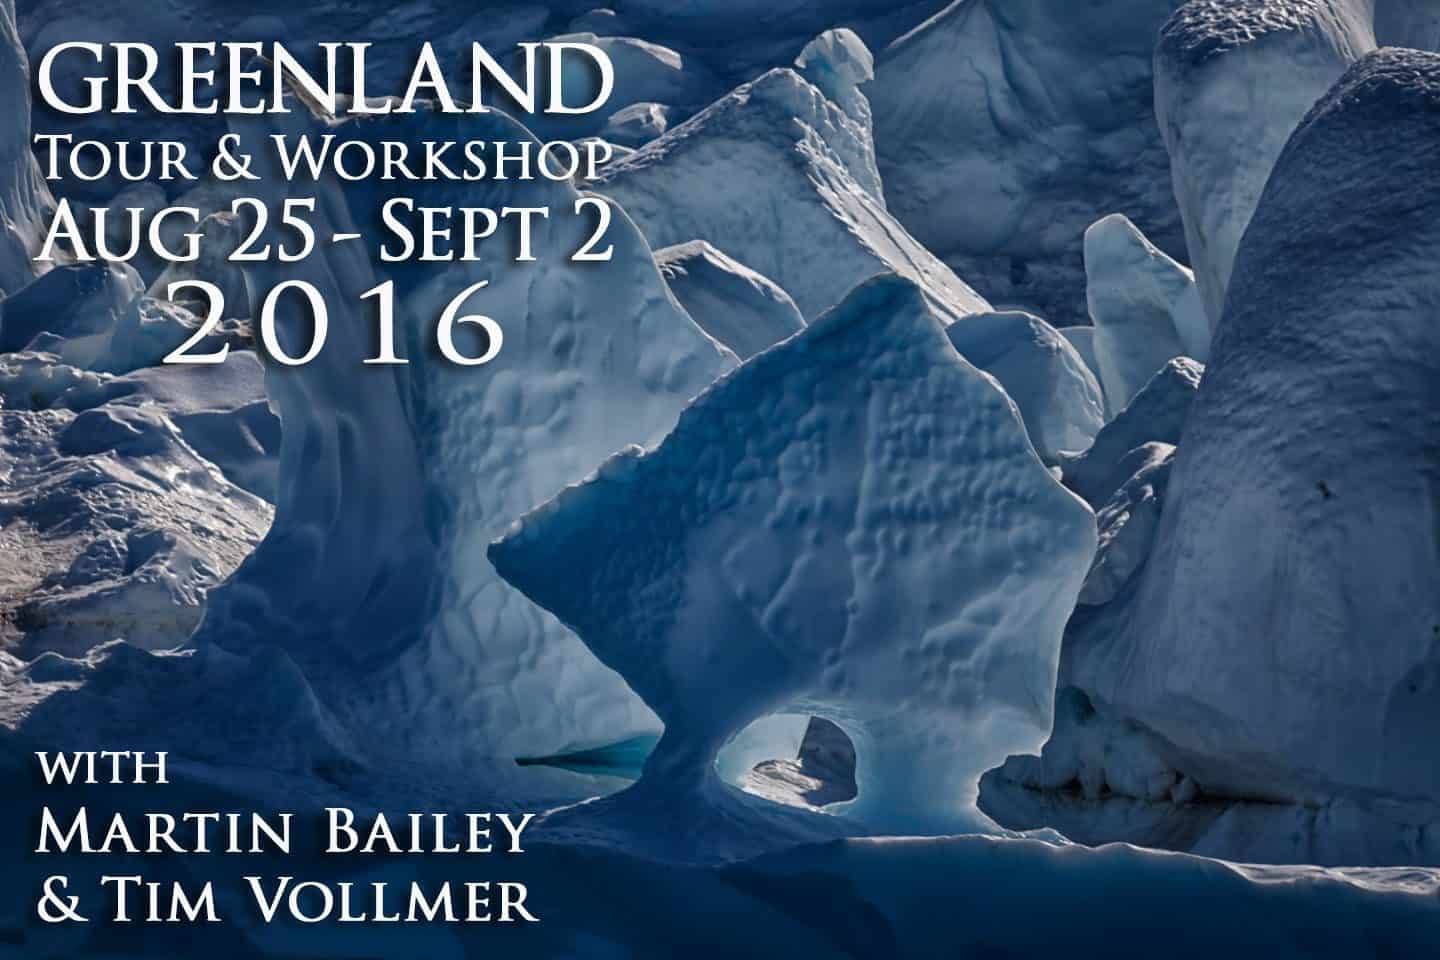 Greenland Tour & Workshop 2016 Balance Payment